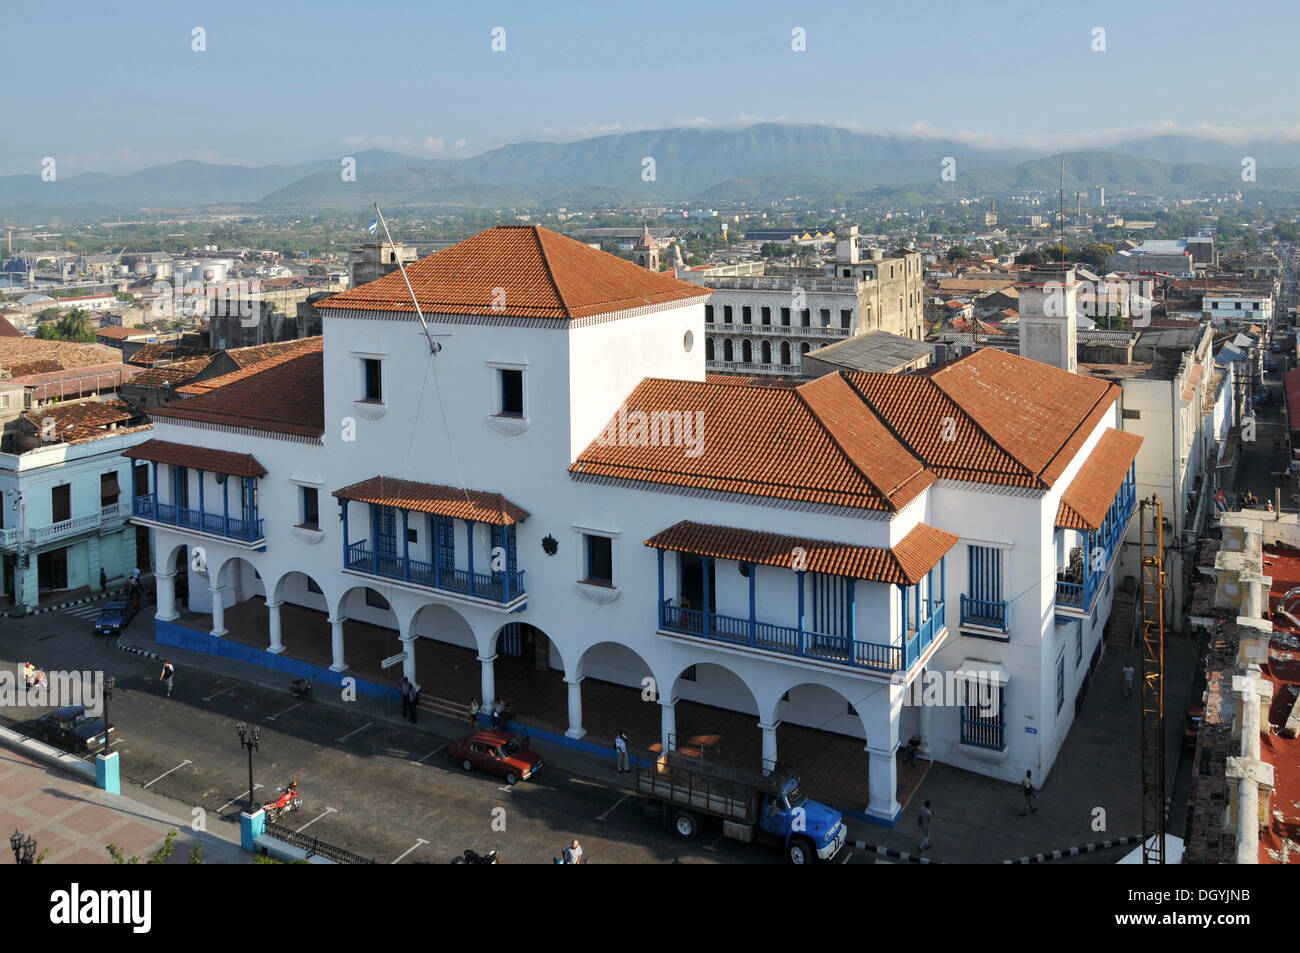 Fidel Castro Balkon, Rathaus, Parque Cespedes Park, Santiago de Cuba, der historische Bezirk, Kuba, Karibik, Zentralamerika Stockfoto